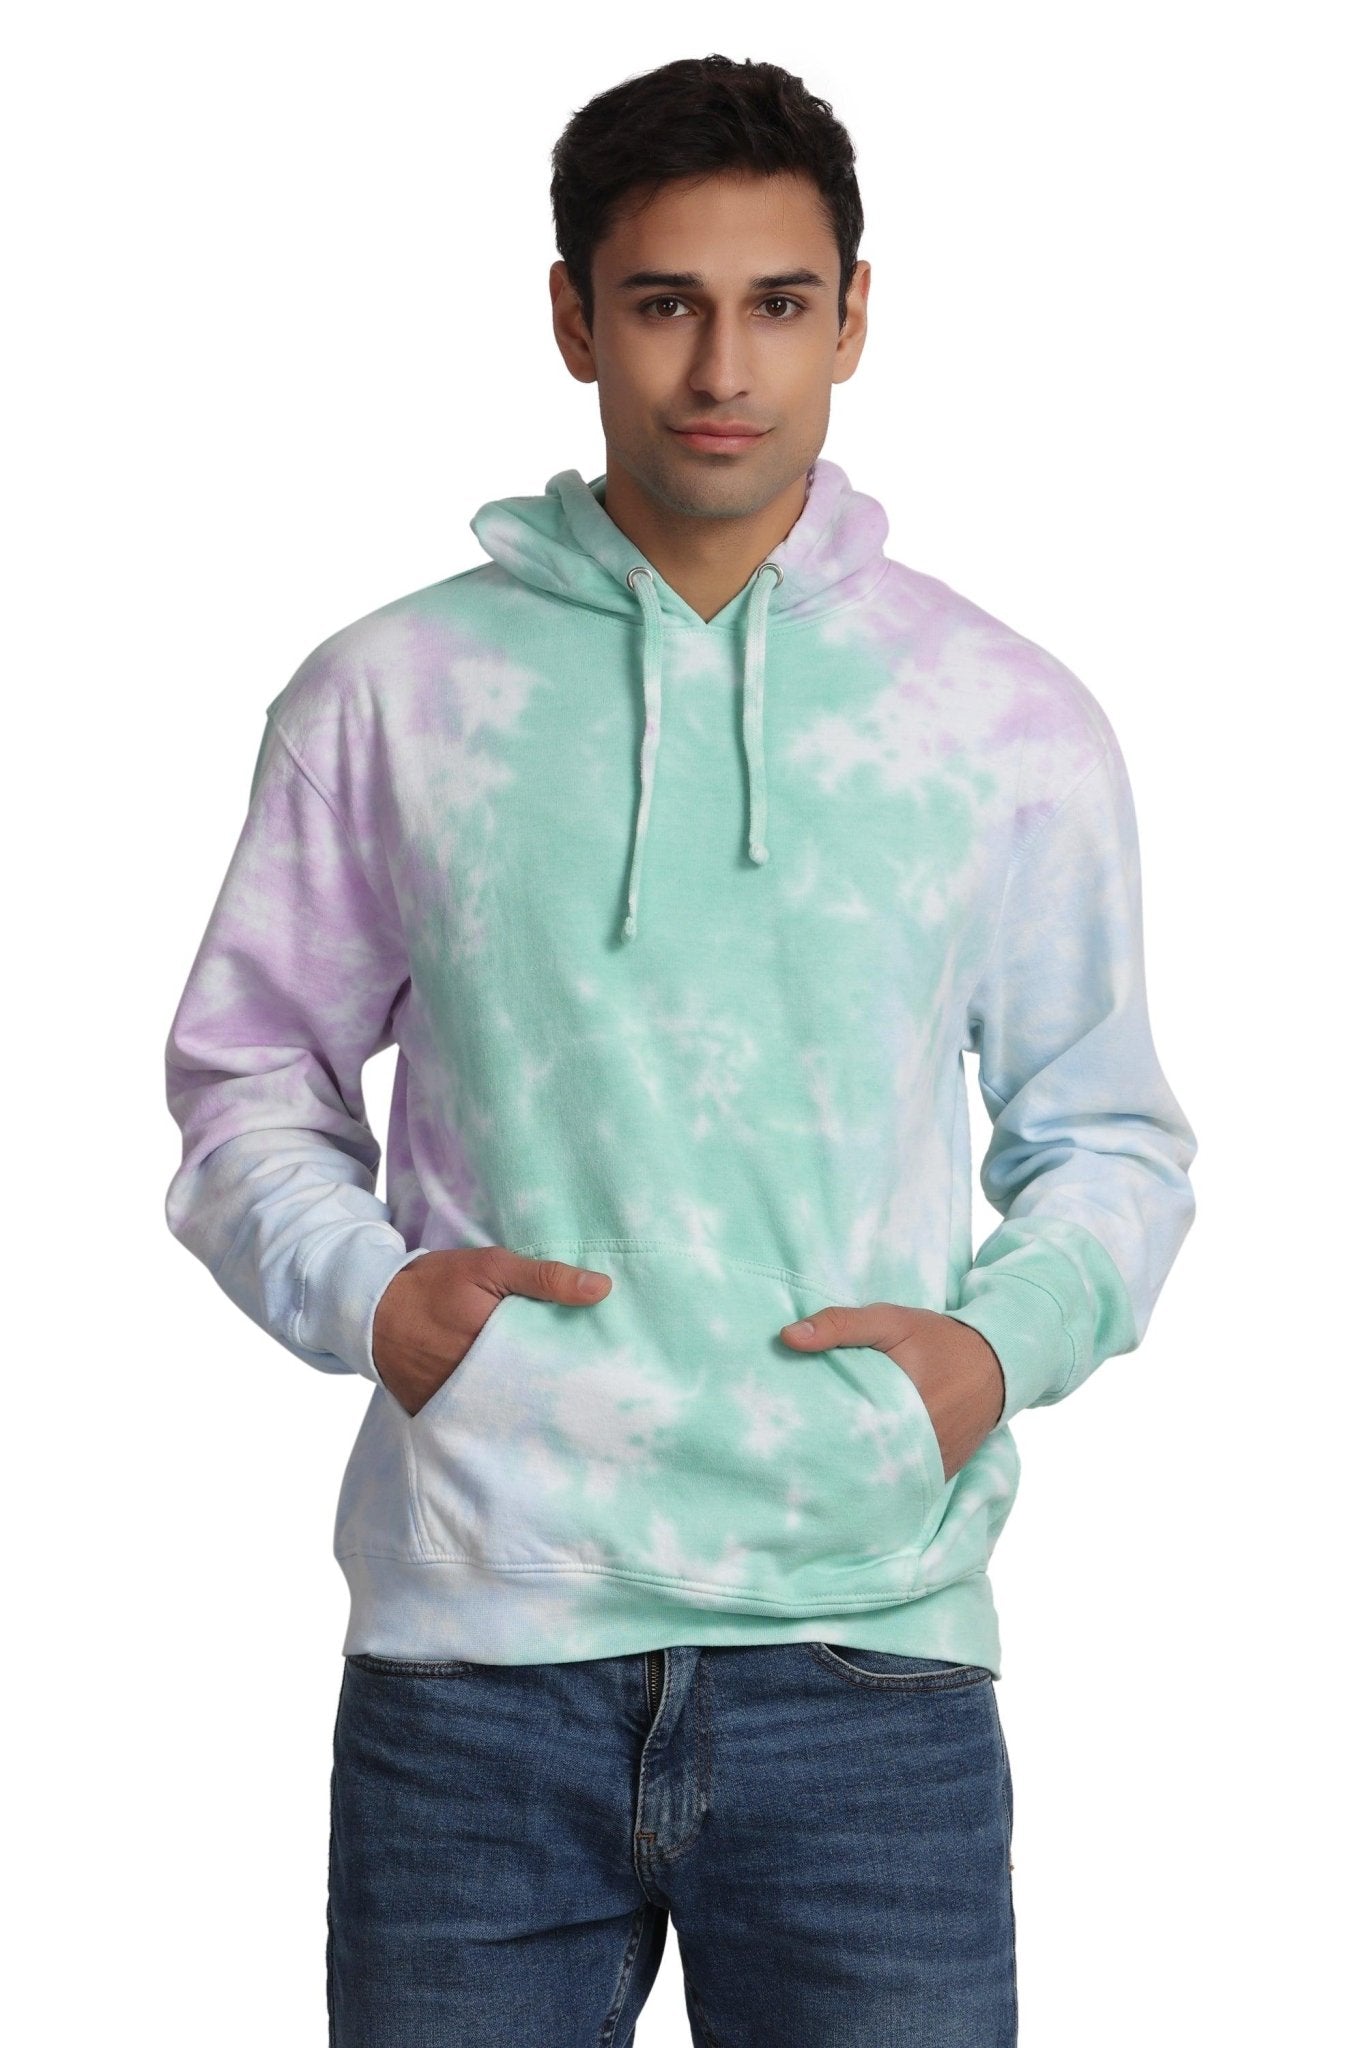 Unisex Tie Dye Pullover Hoodie Premium Cotton Blend Activewear H704 - Advance Apparels Inc